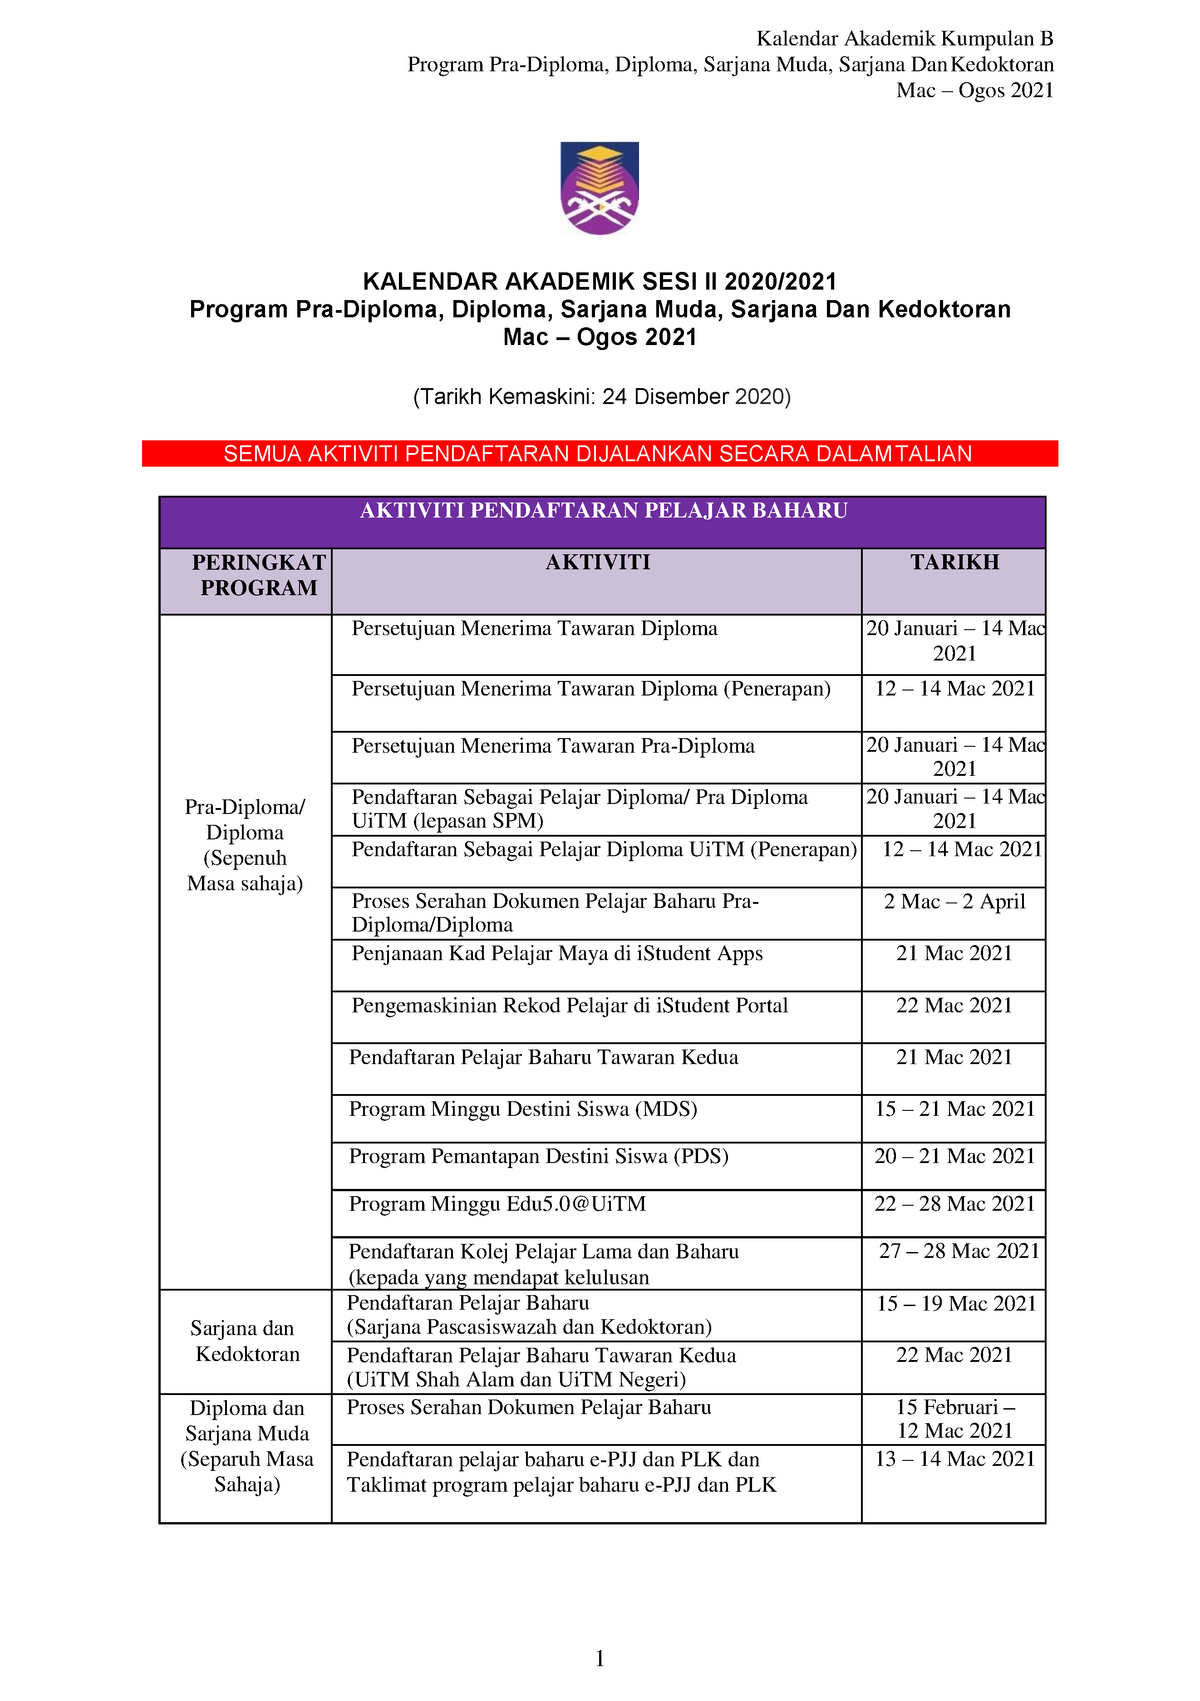 Takwim UITM march 2021 - Program Pra-Diploma, Diploma, Sarjana Muda